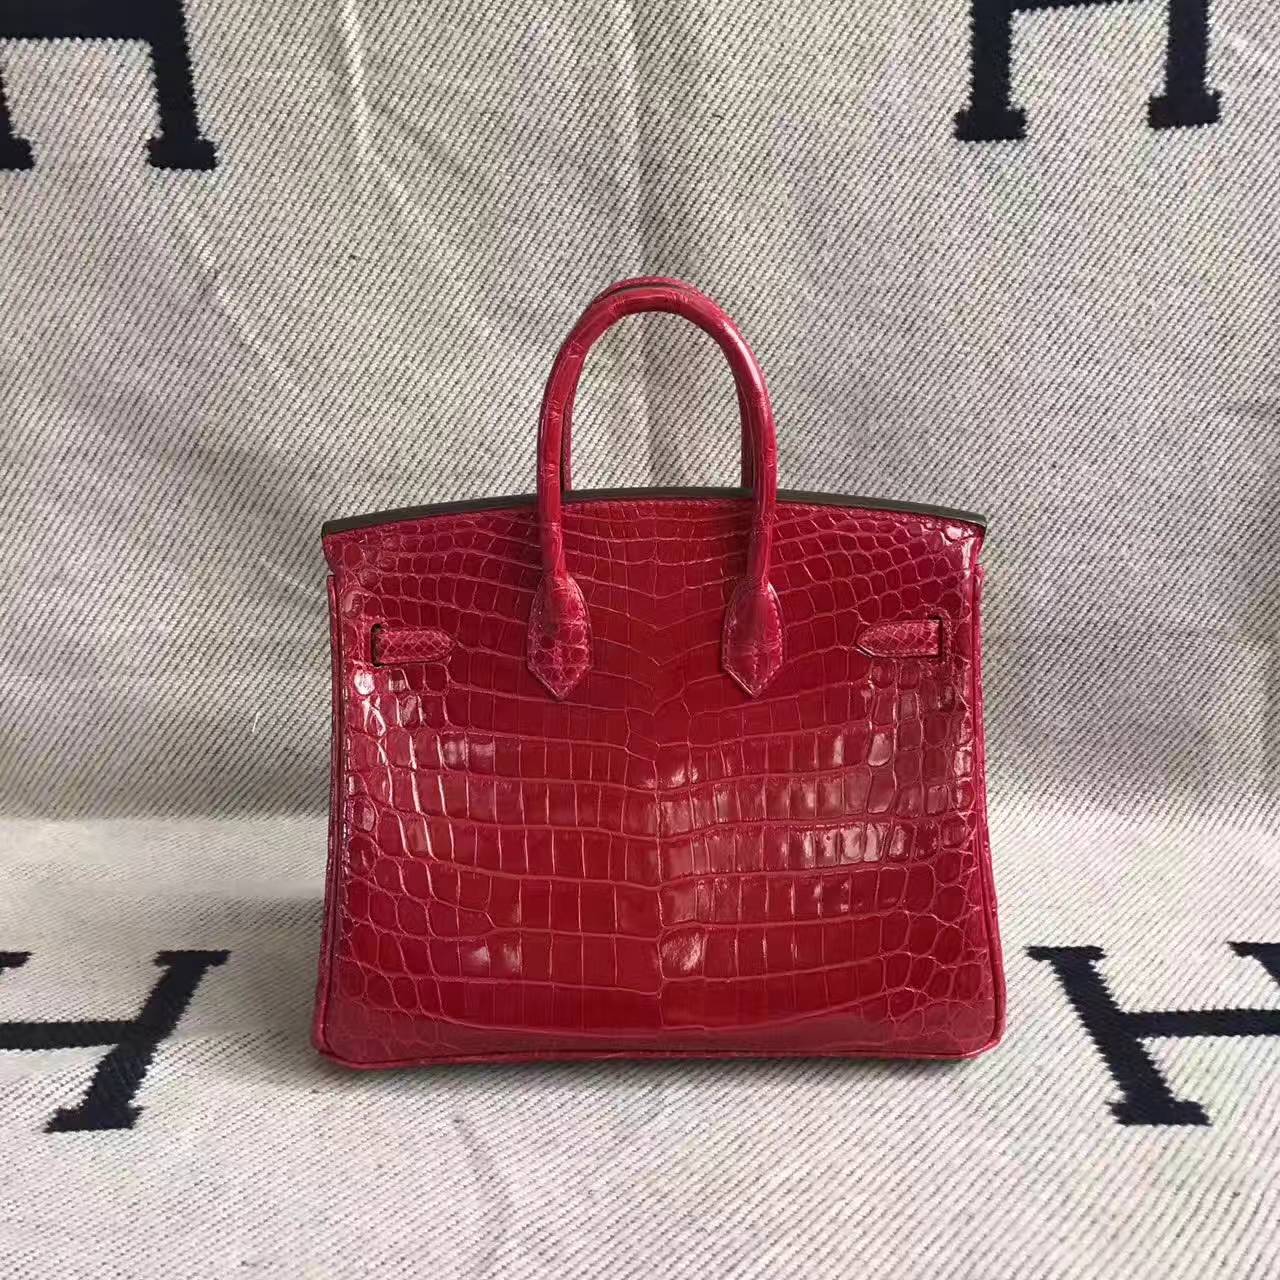 Wholesale Hermes Red Crocodile Shiny Leather Birkin Bag 25cm – HEMA ...